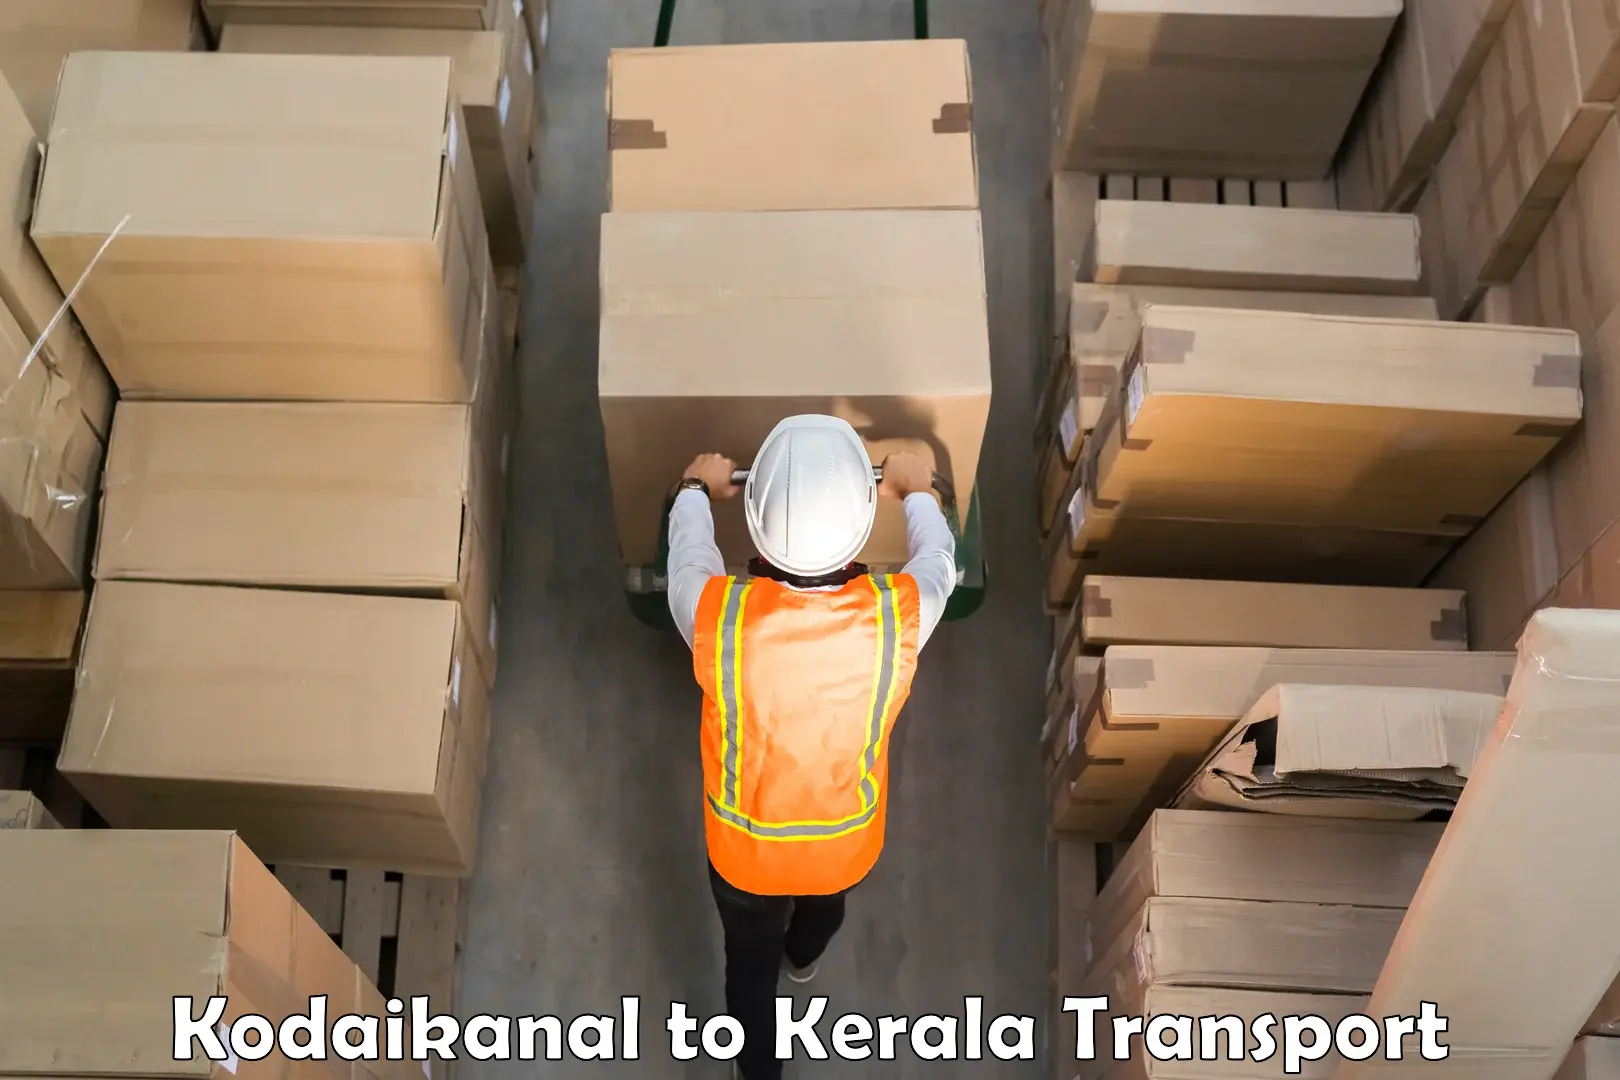 Truck transport companies in India Kodaikanal to Calicut